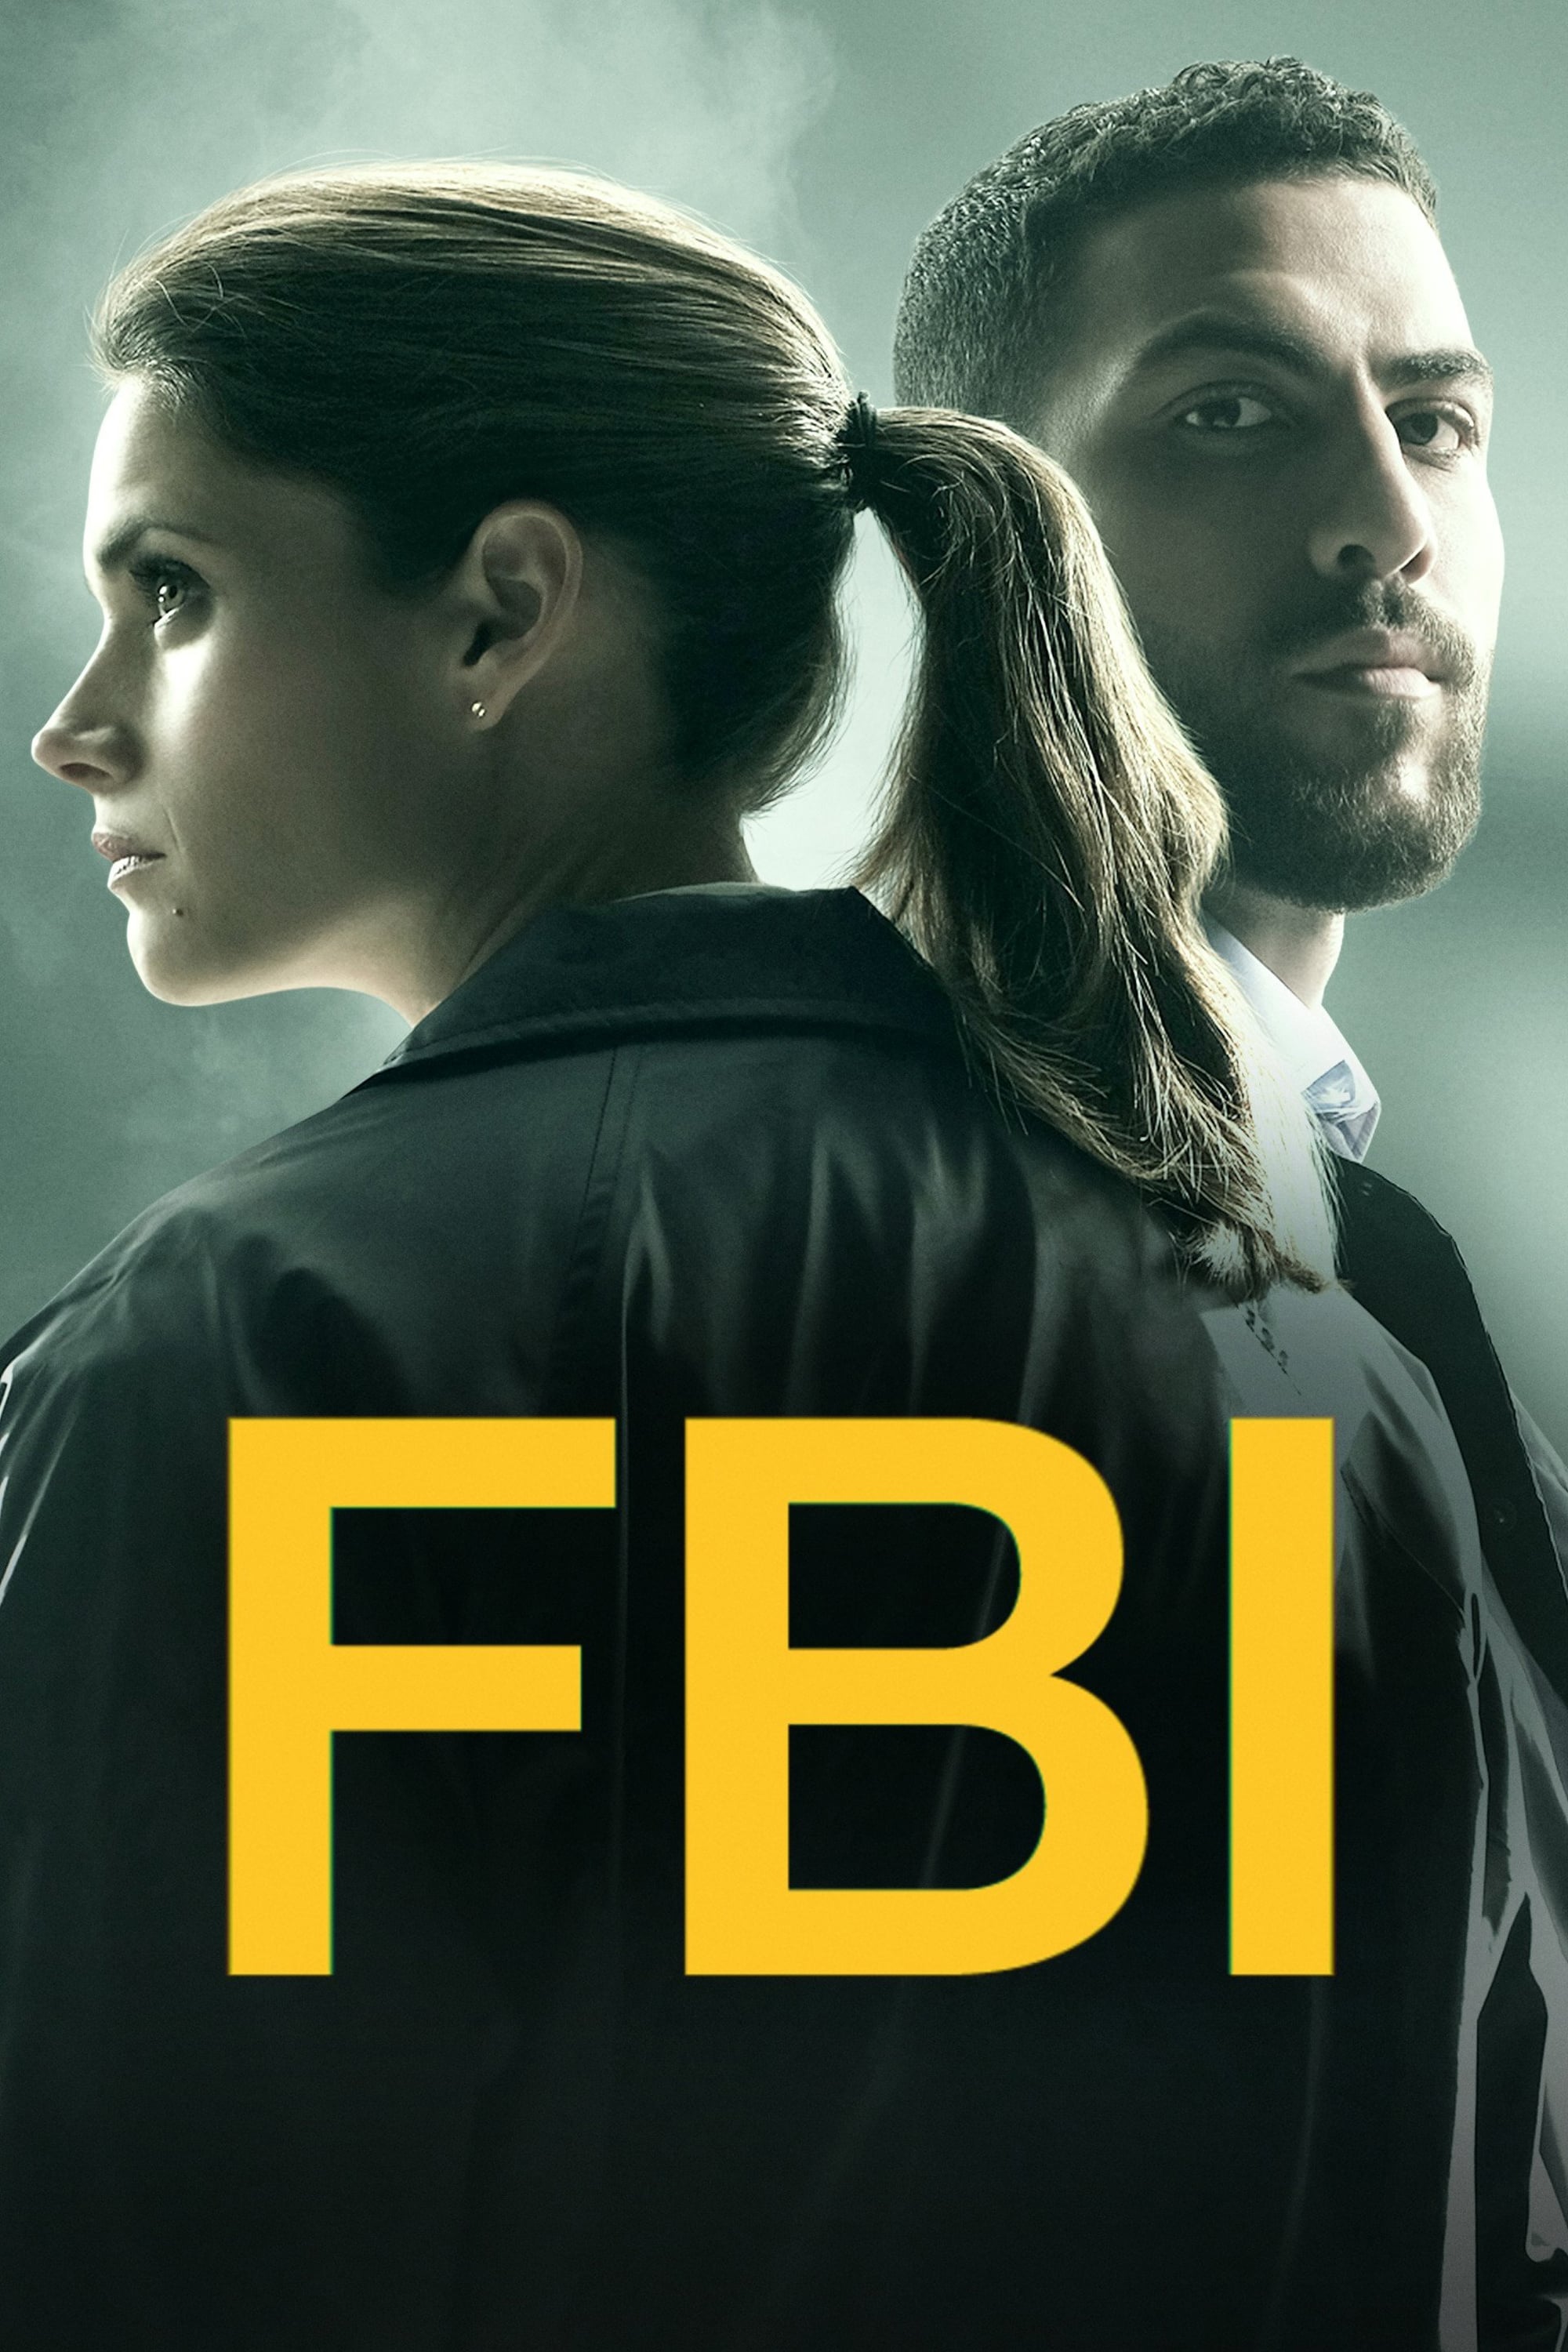 FBI - Saison 2